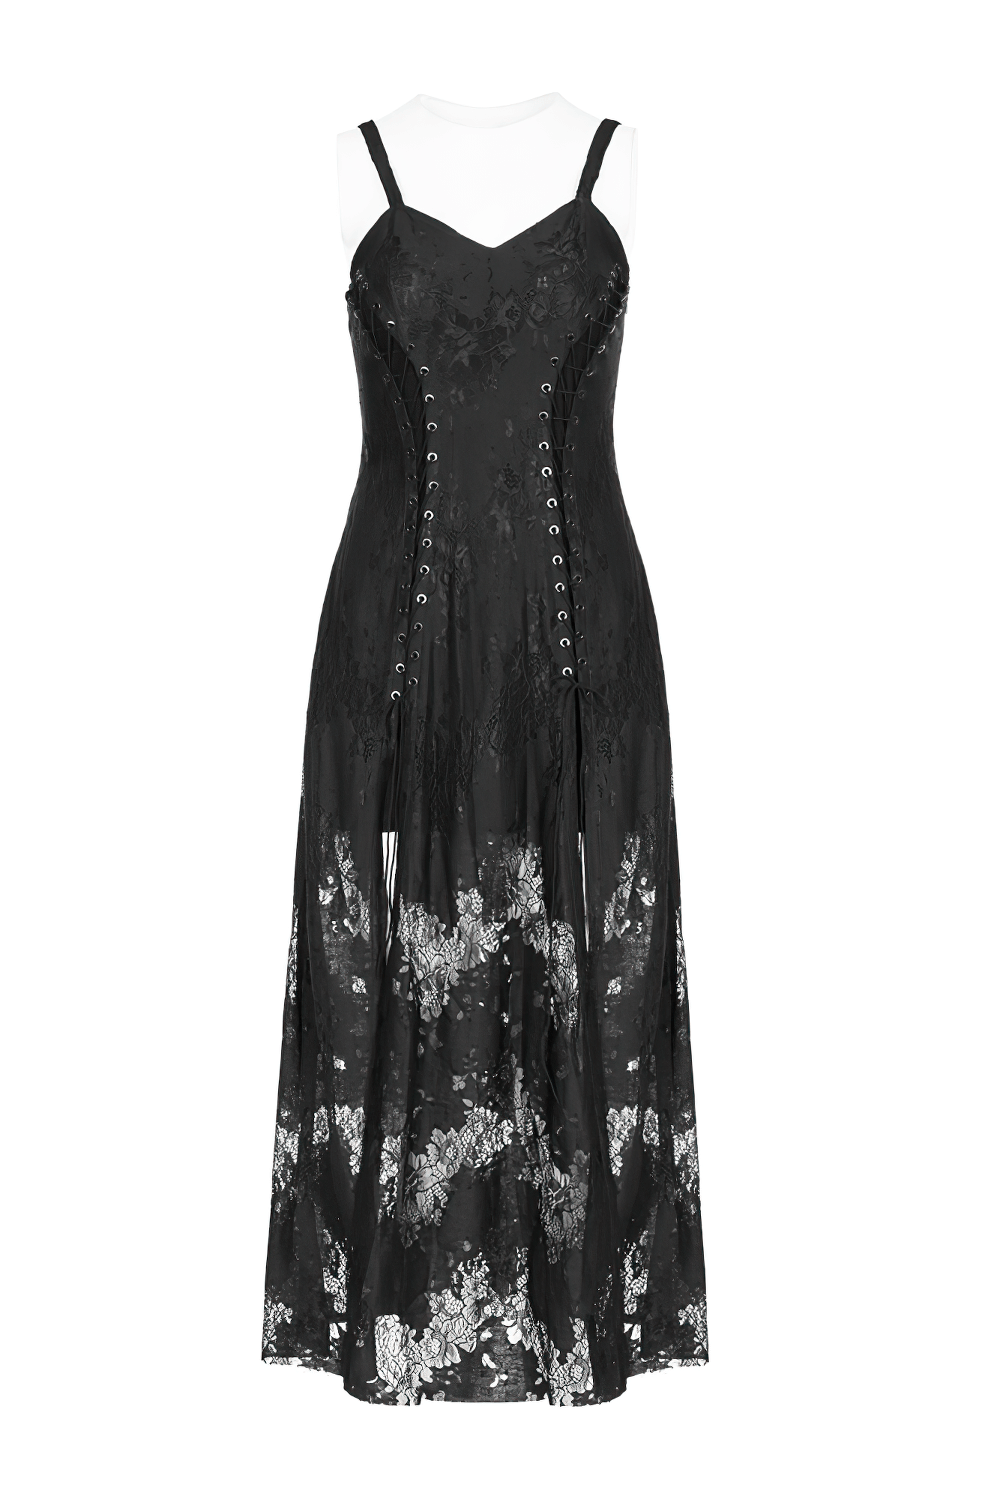 Elegant Dark Gothic Lace Strap Backless Dress